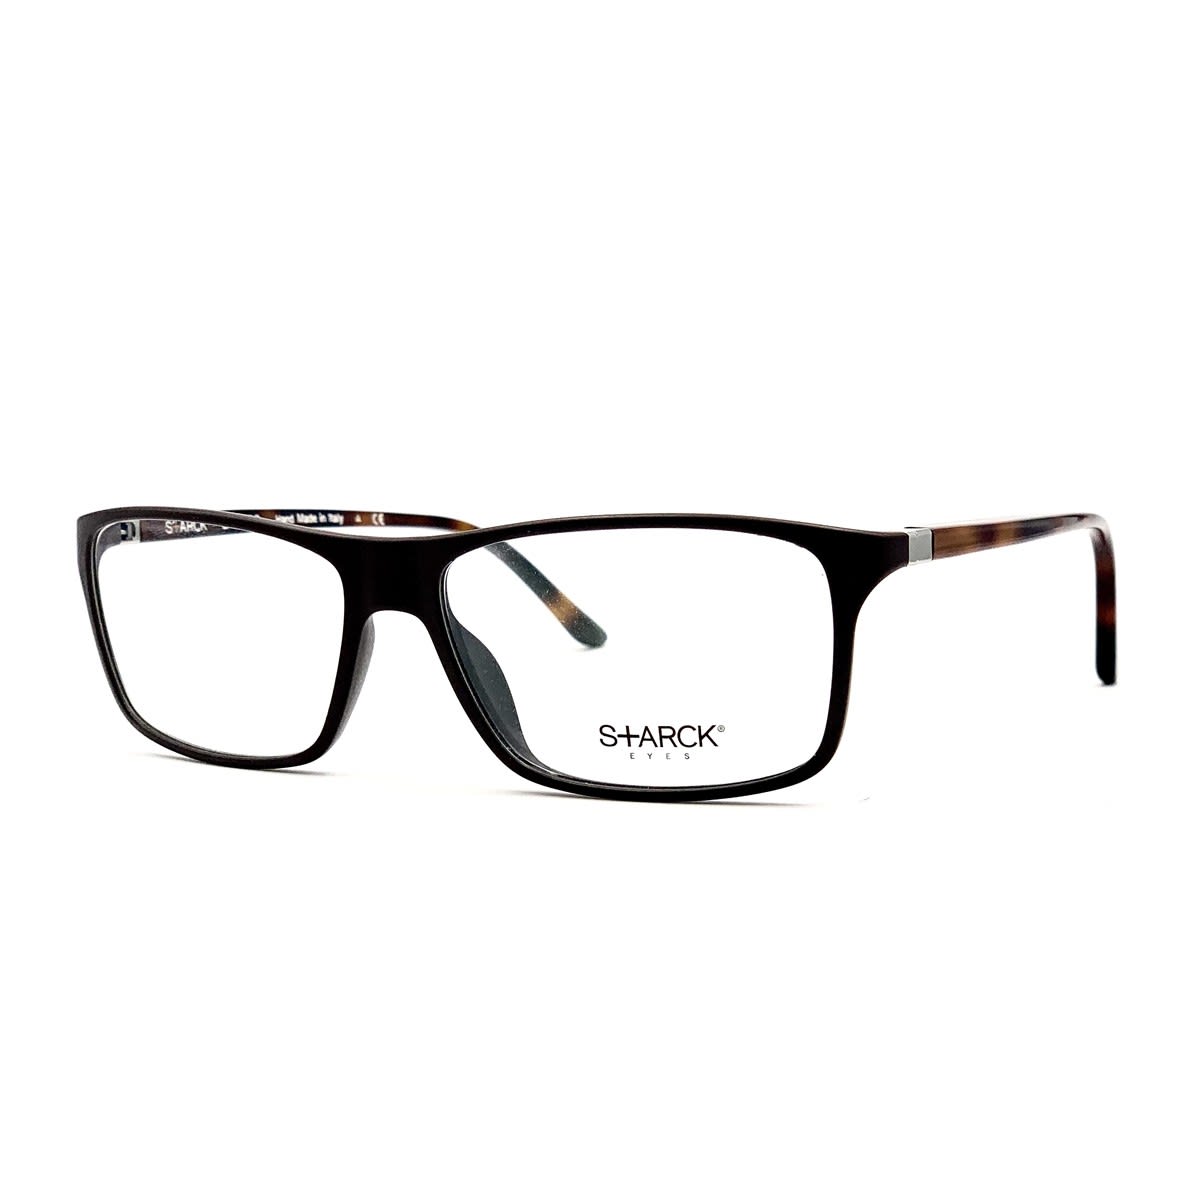 Philippe Starck 1043 Vista Glasses In Nero